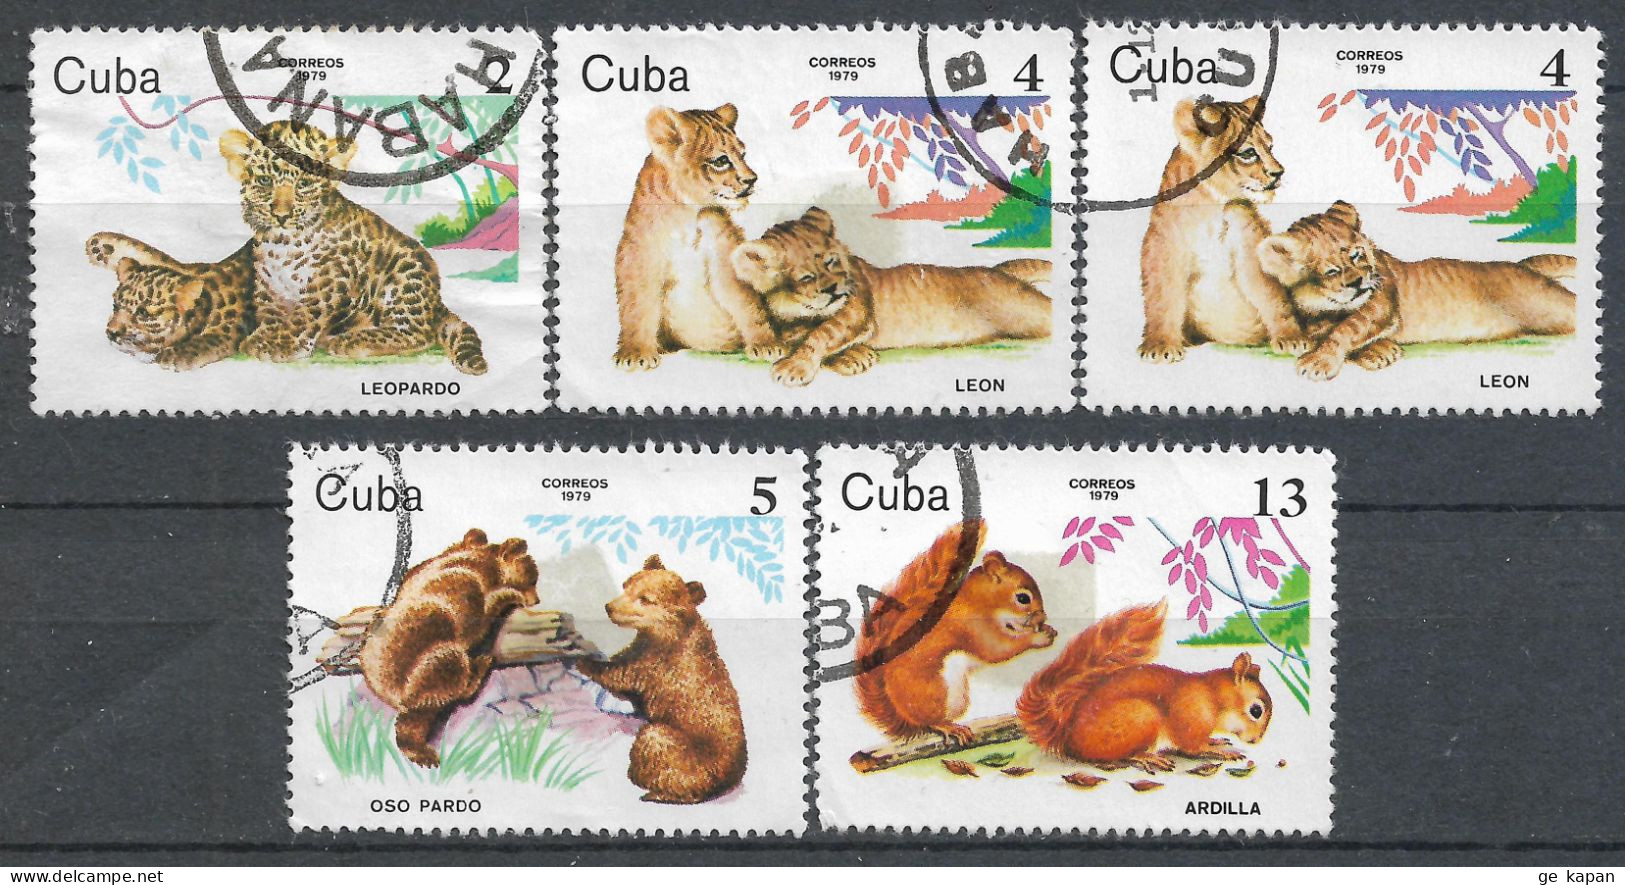 1979 CUBA Set Of 5 Used Stamps (Michel # 2440,2442-2444) CV €1.50 - Usados